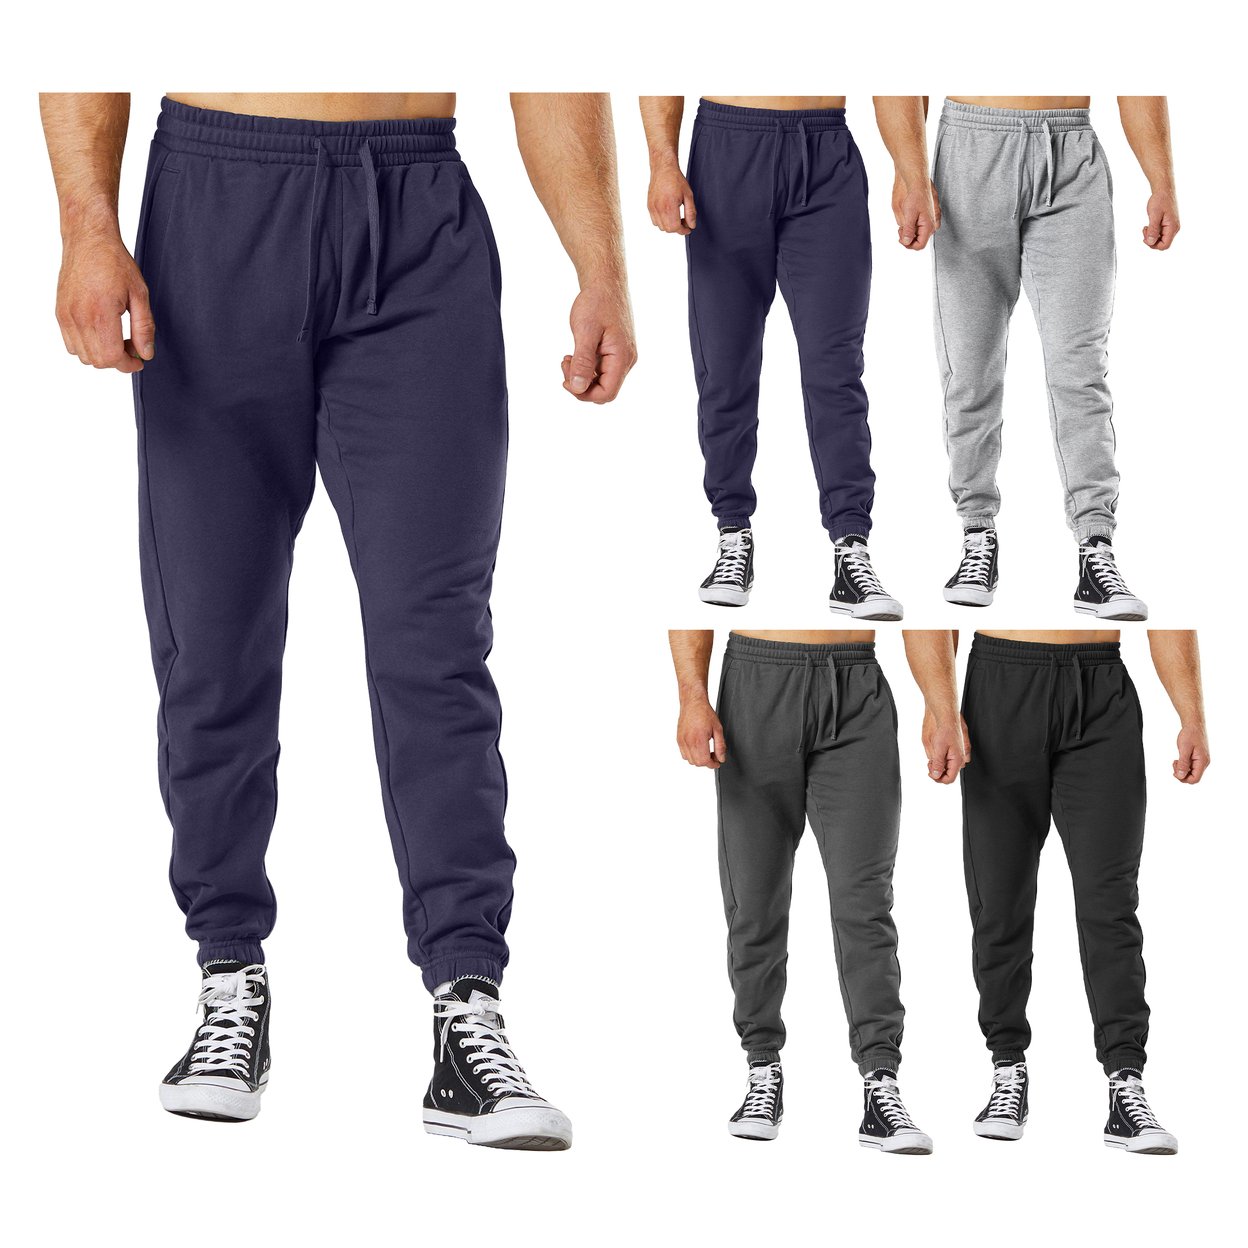 2-Pack: Men's Ultra-Soft Cozy Winter Warm Casual Fleece-Lined Sweatpants Jogger - Black & Black, X-large